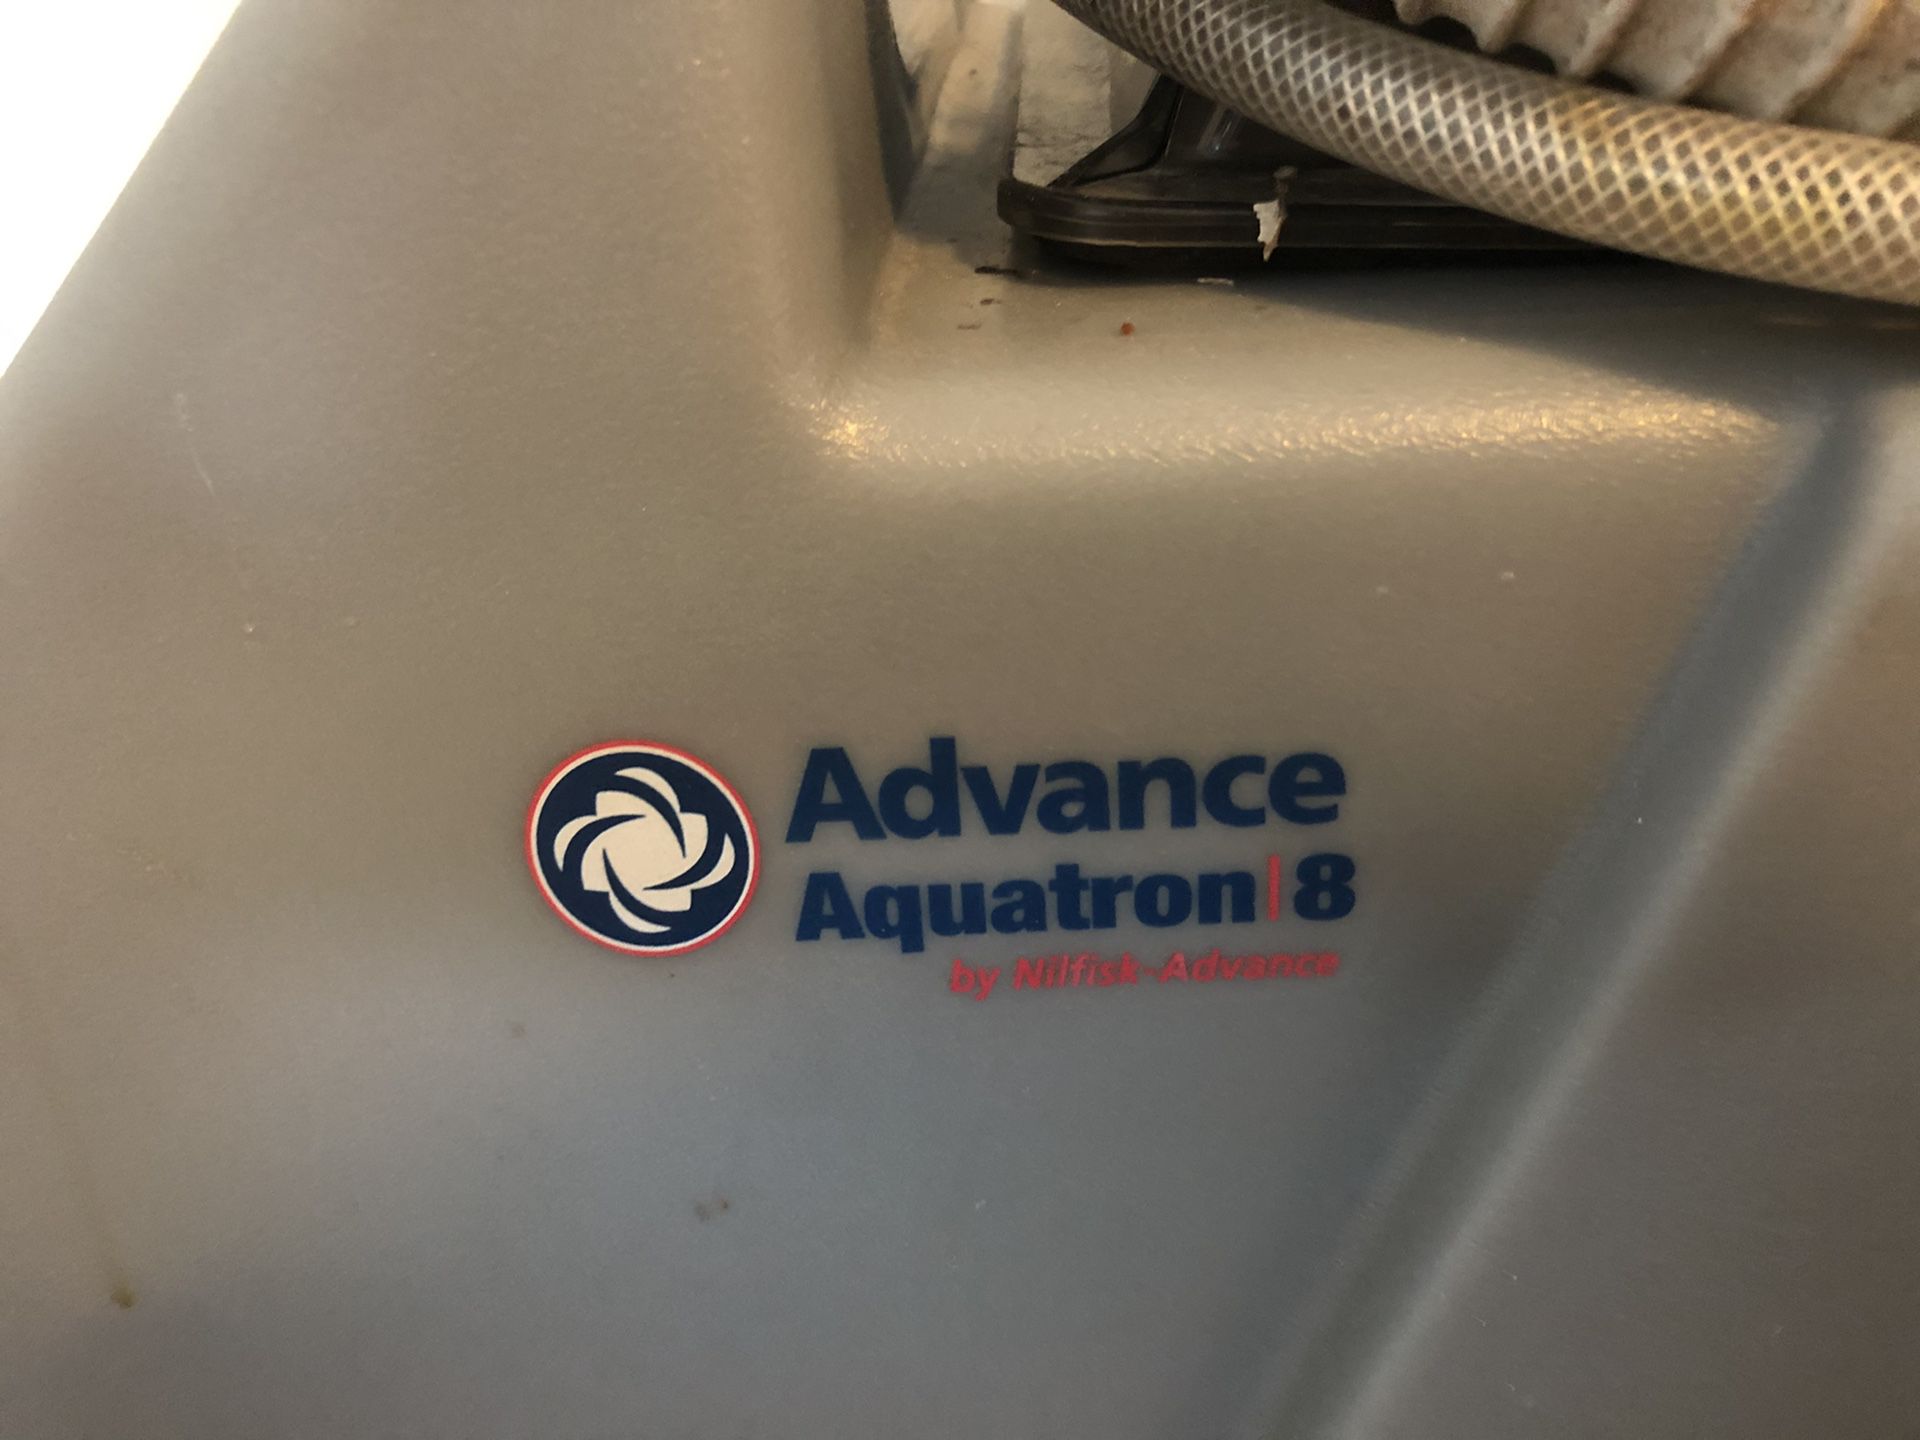 Carpet cleaning advance aquatron 8 machine